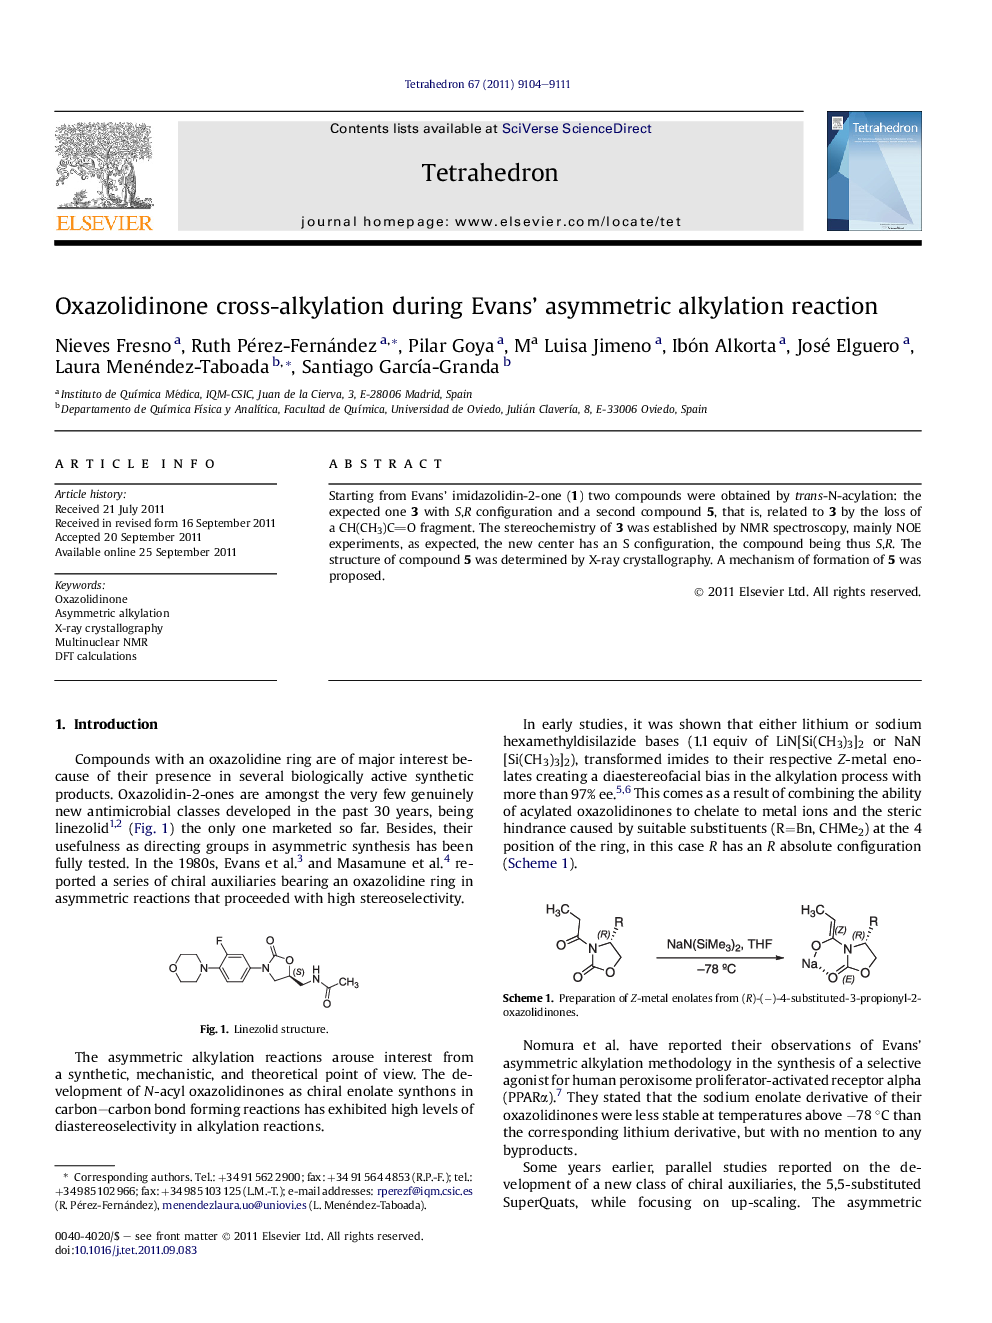 Oxazolidinone cross-alkylation during Evans’ asymmetric alkylation reaction